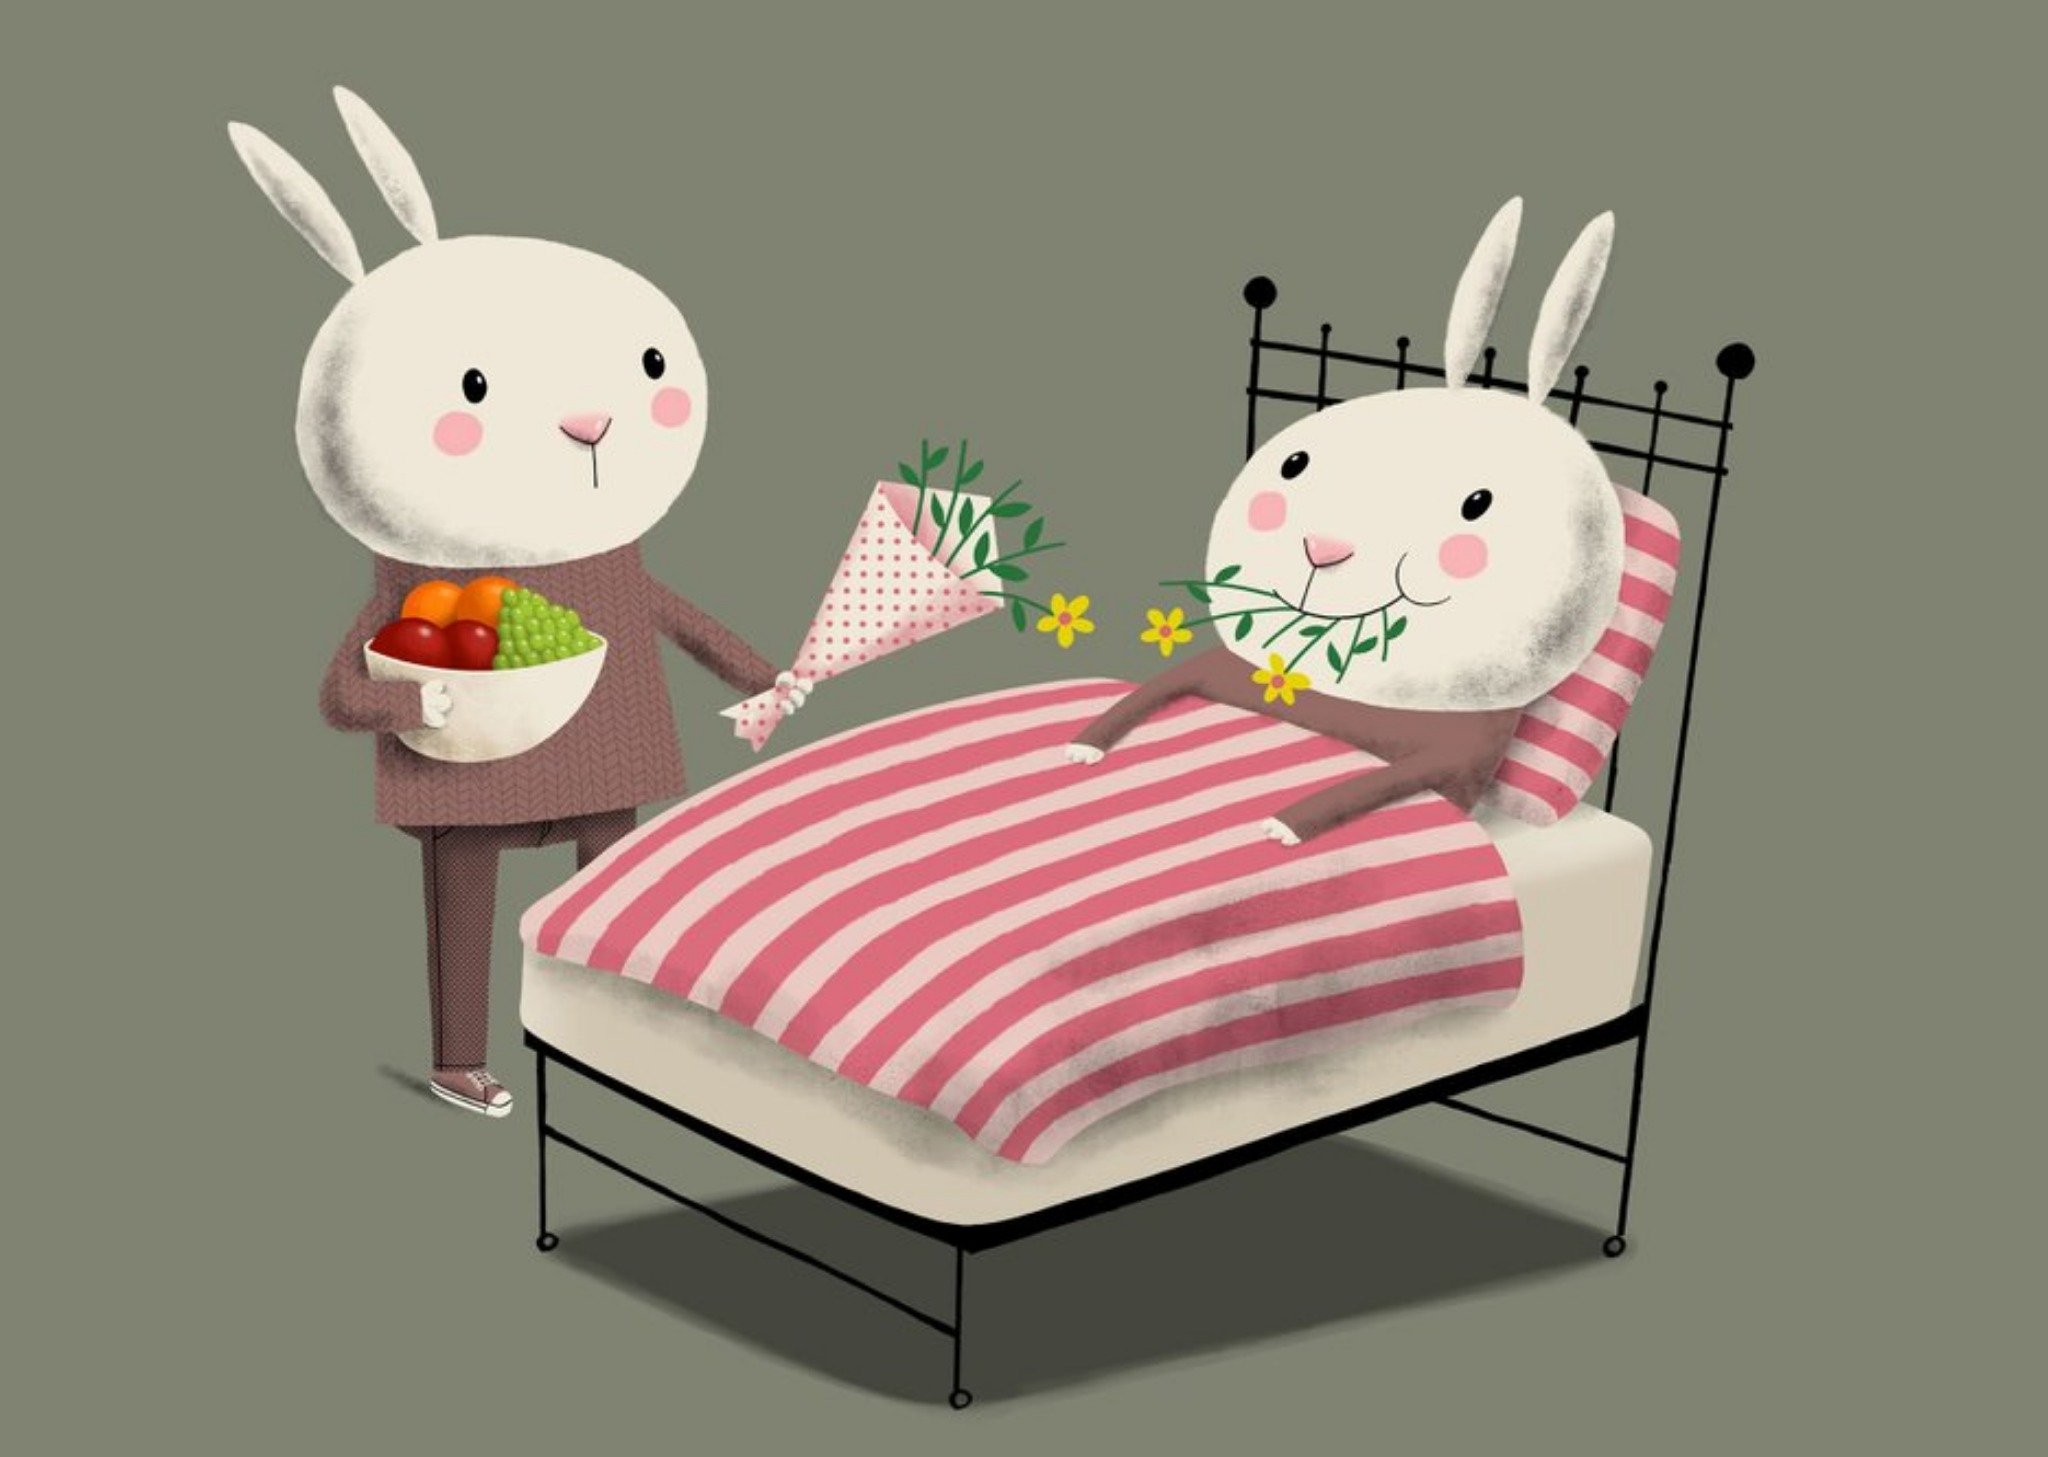 Moonpig Modern Cute Illustration Poorly Sick Ill Rabbit In Bed Get Well Soon Card Ecard